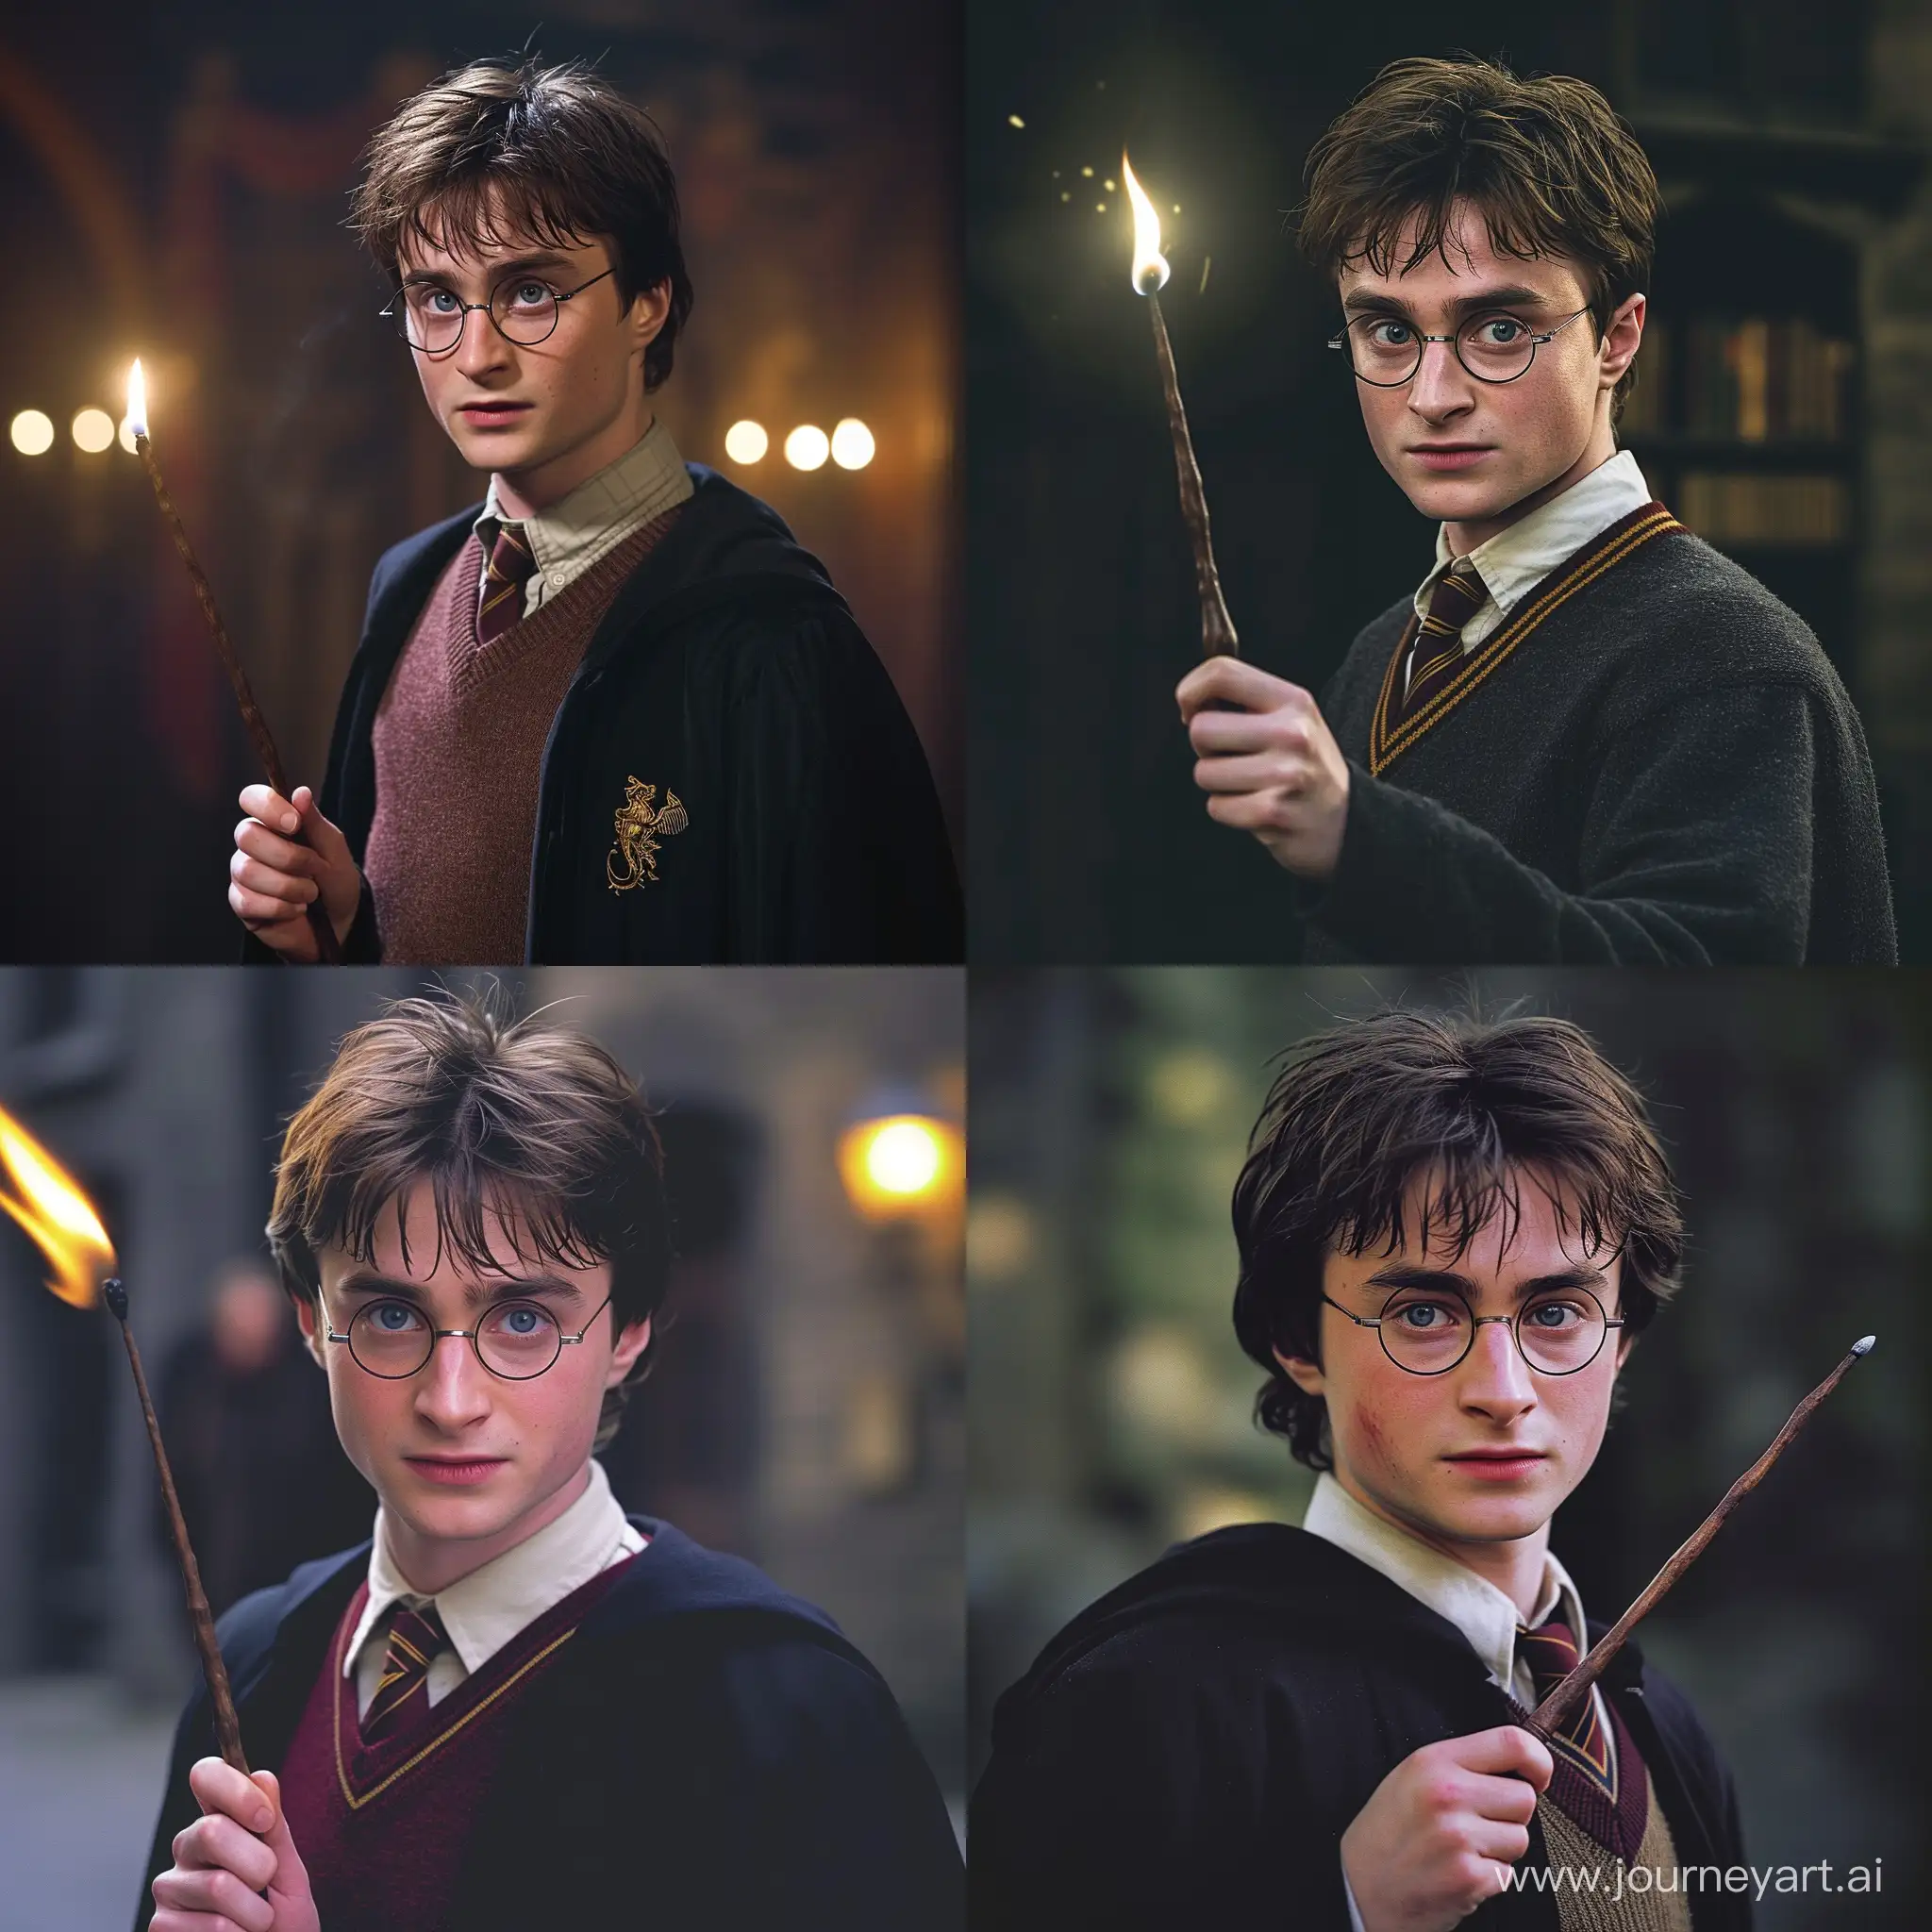 Harry Potter holding a magic wand